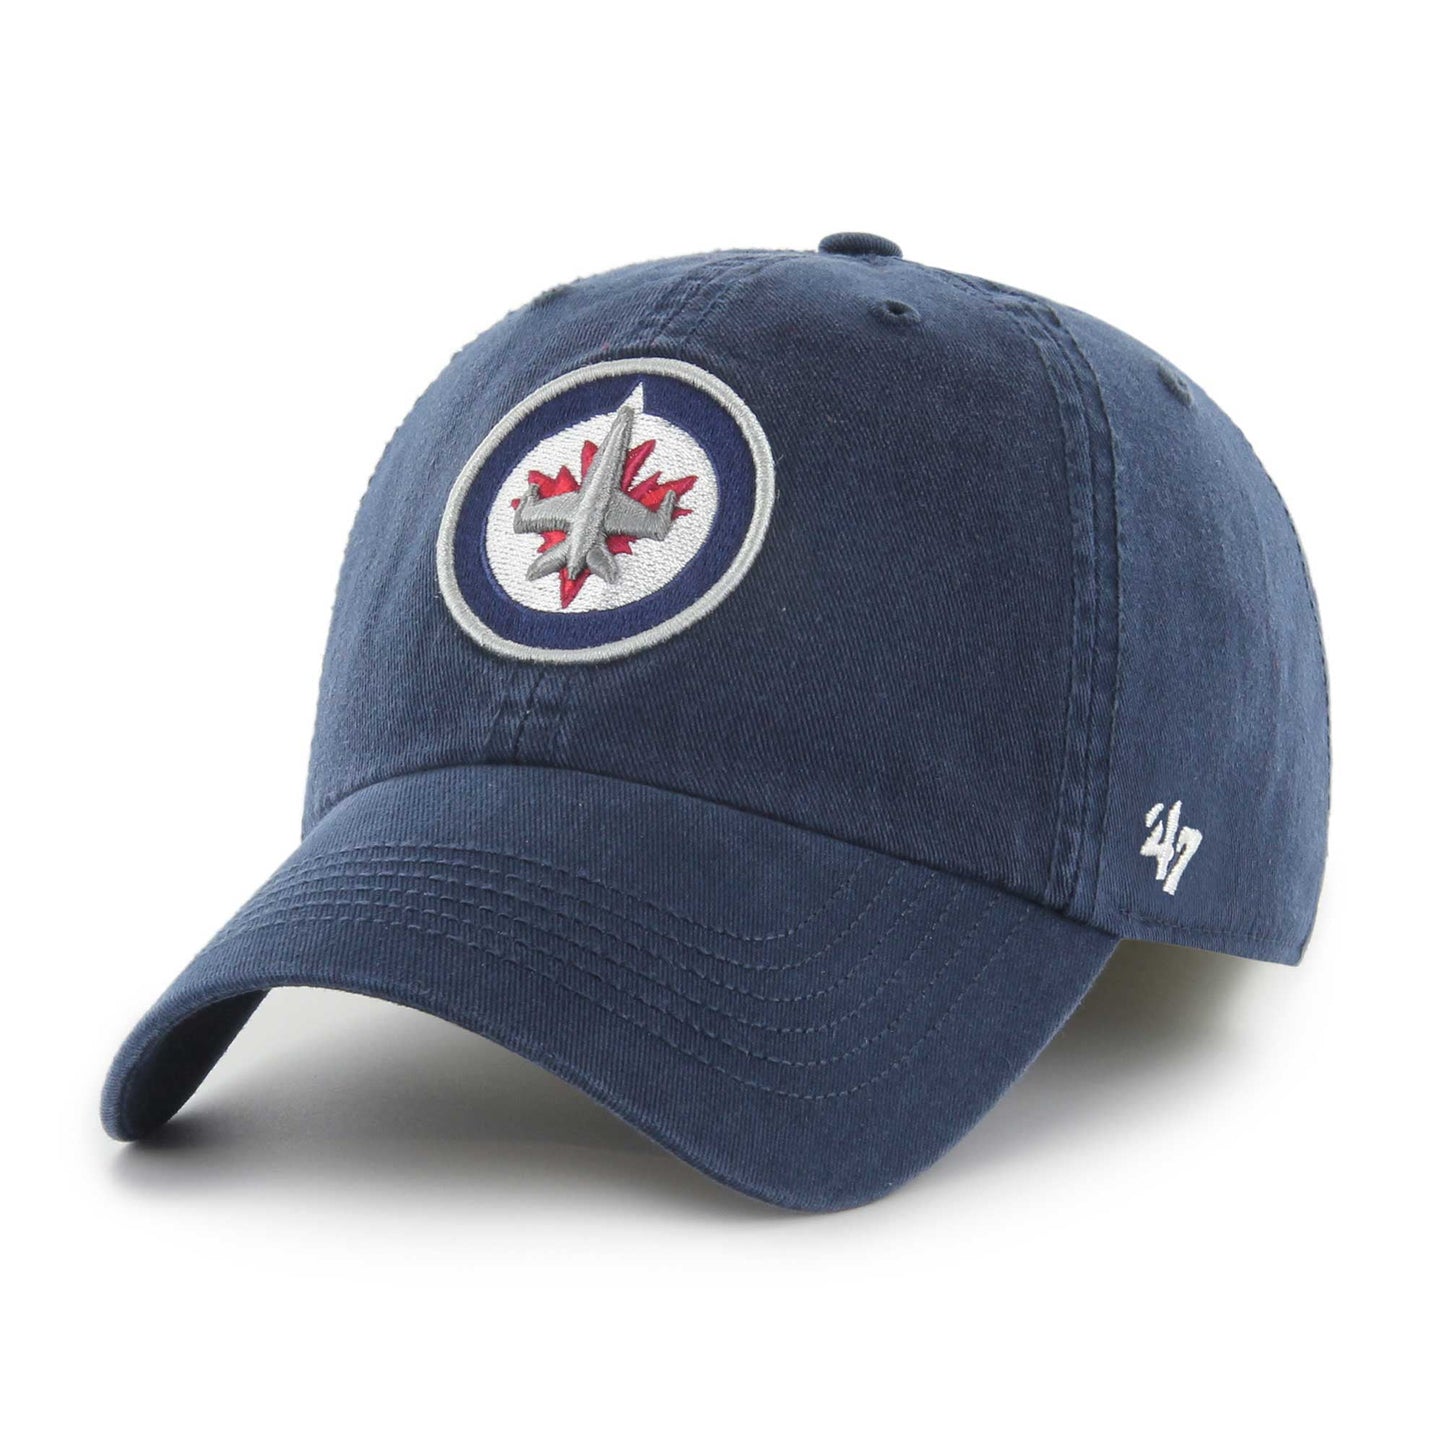 Men's '47 Navy Winnipeg Jets Classic Franchise Fitted Hat